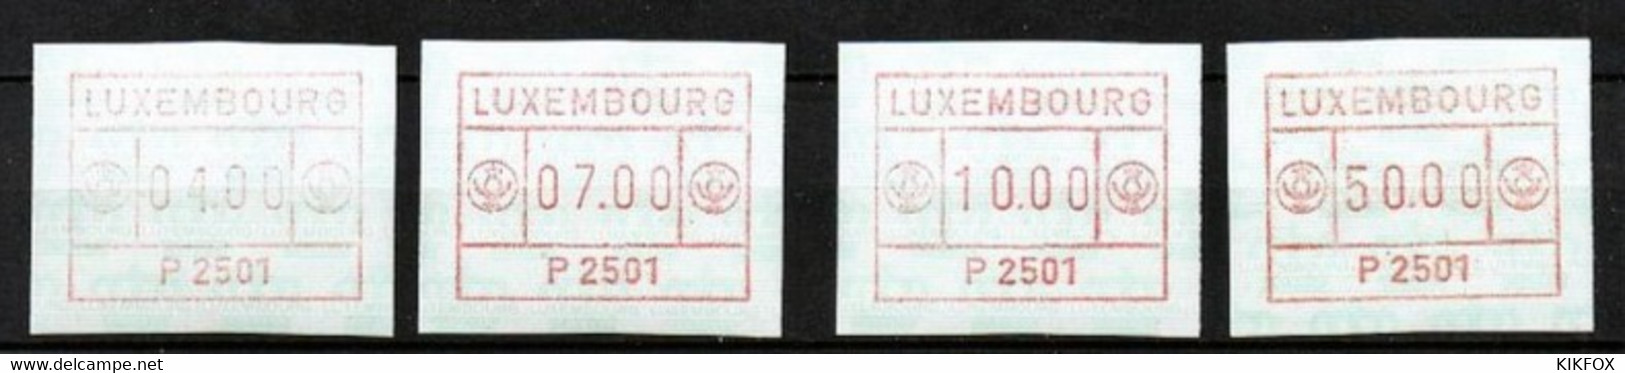 Luxembourg, Luxemburg , 1983, MI 1 ,AUTOMATENMARKEN, DISTRIBUTEUR , 4 WERTE - Vignettes D'affranchissement